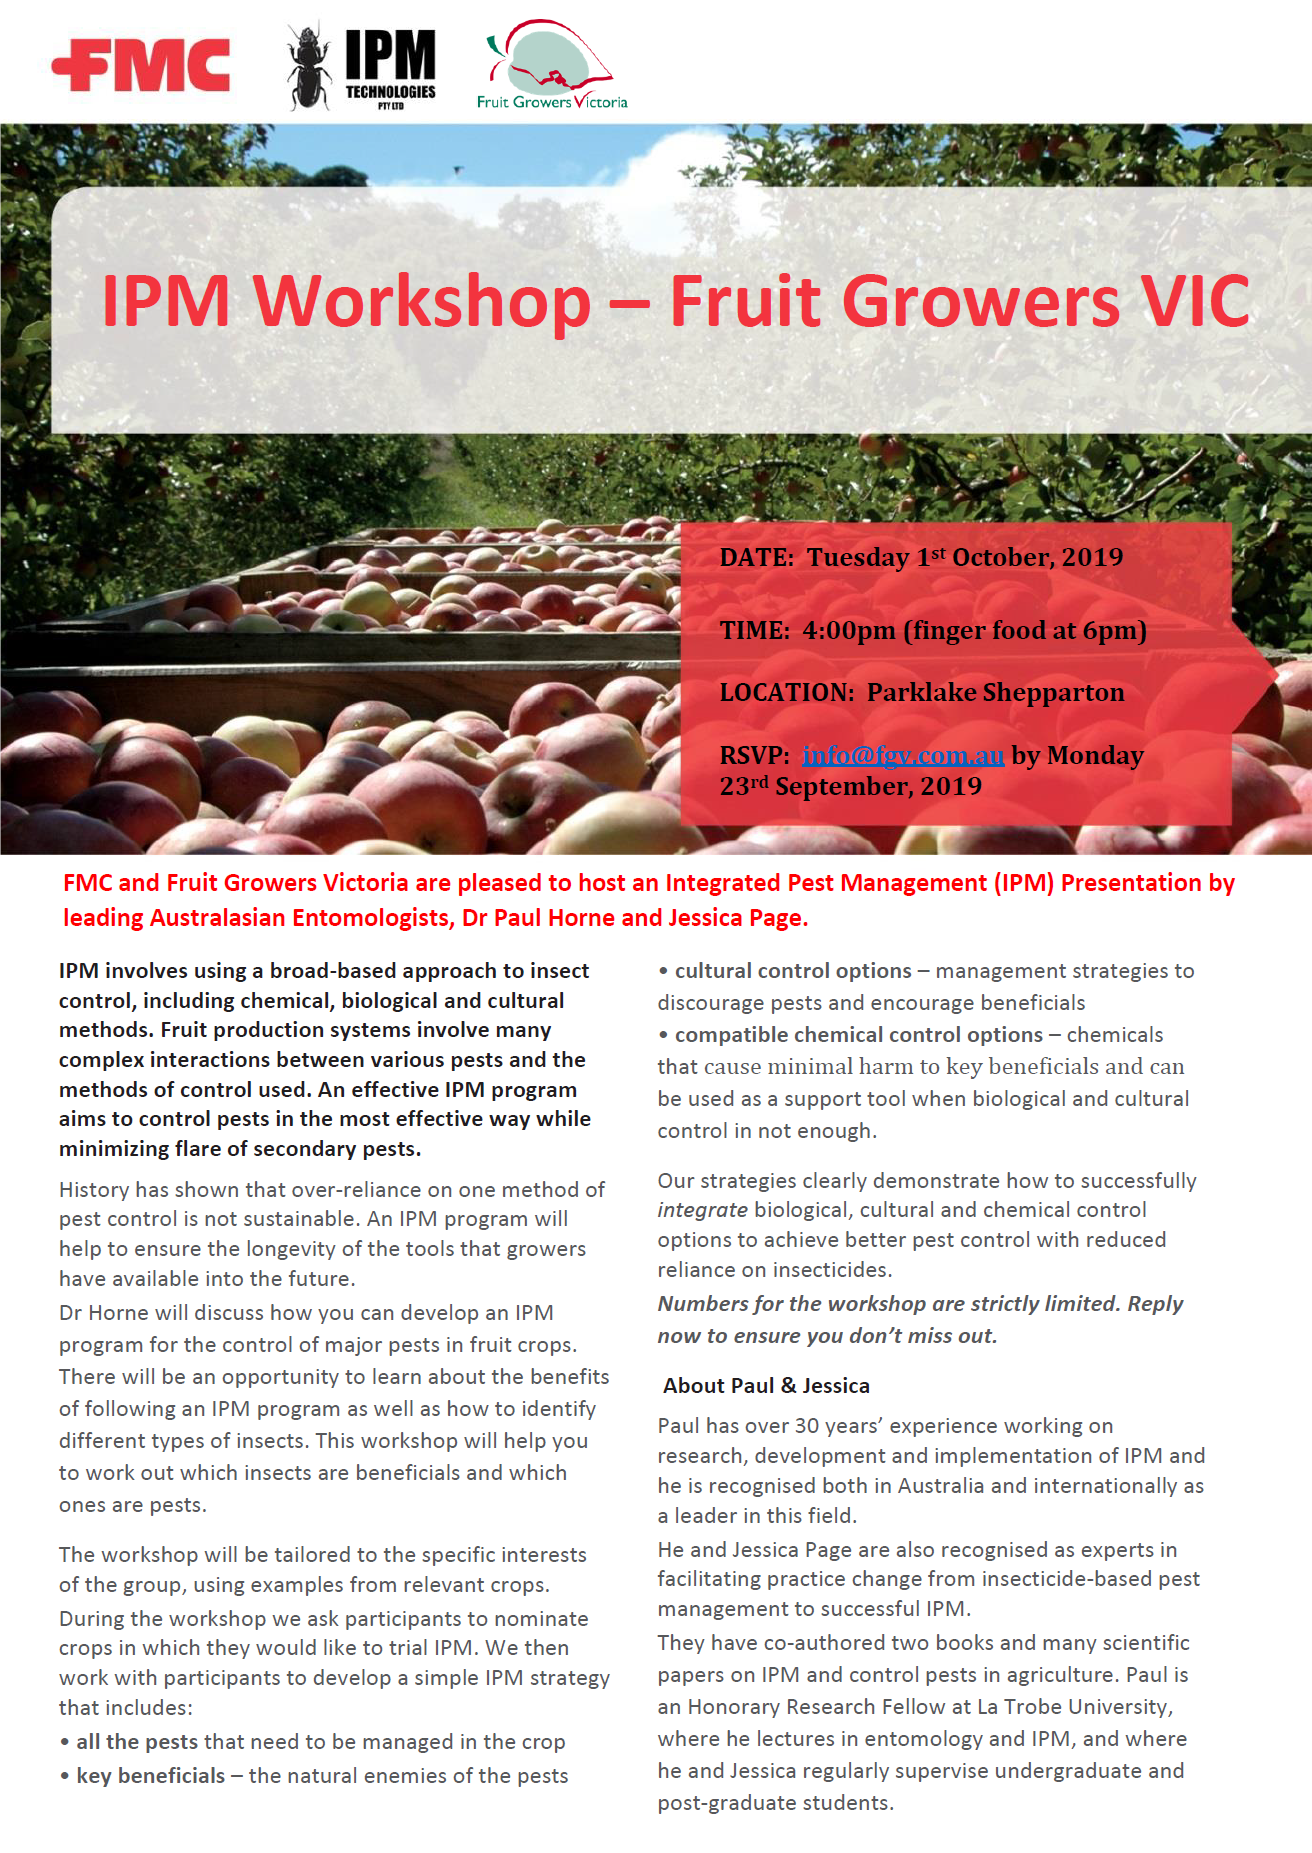 FMC & Fruit Growers Victoria IPM Workshop- Tuesday 1st October 2019, Parklake Shepparton